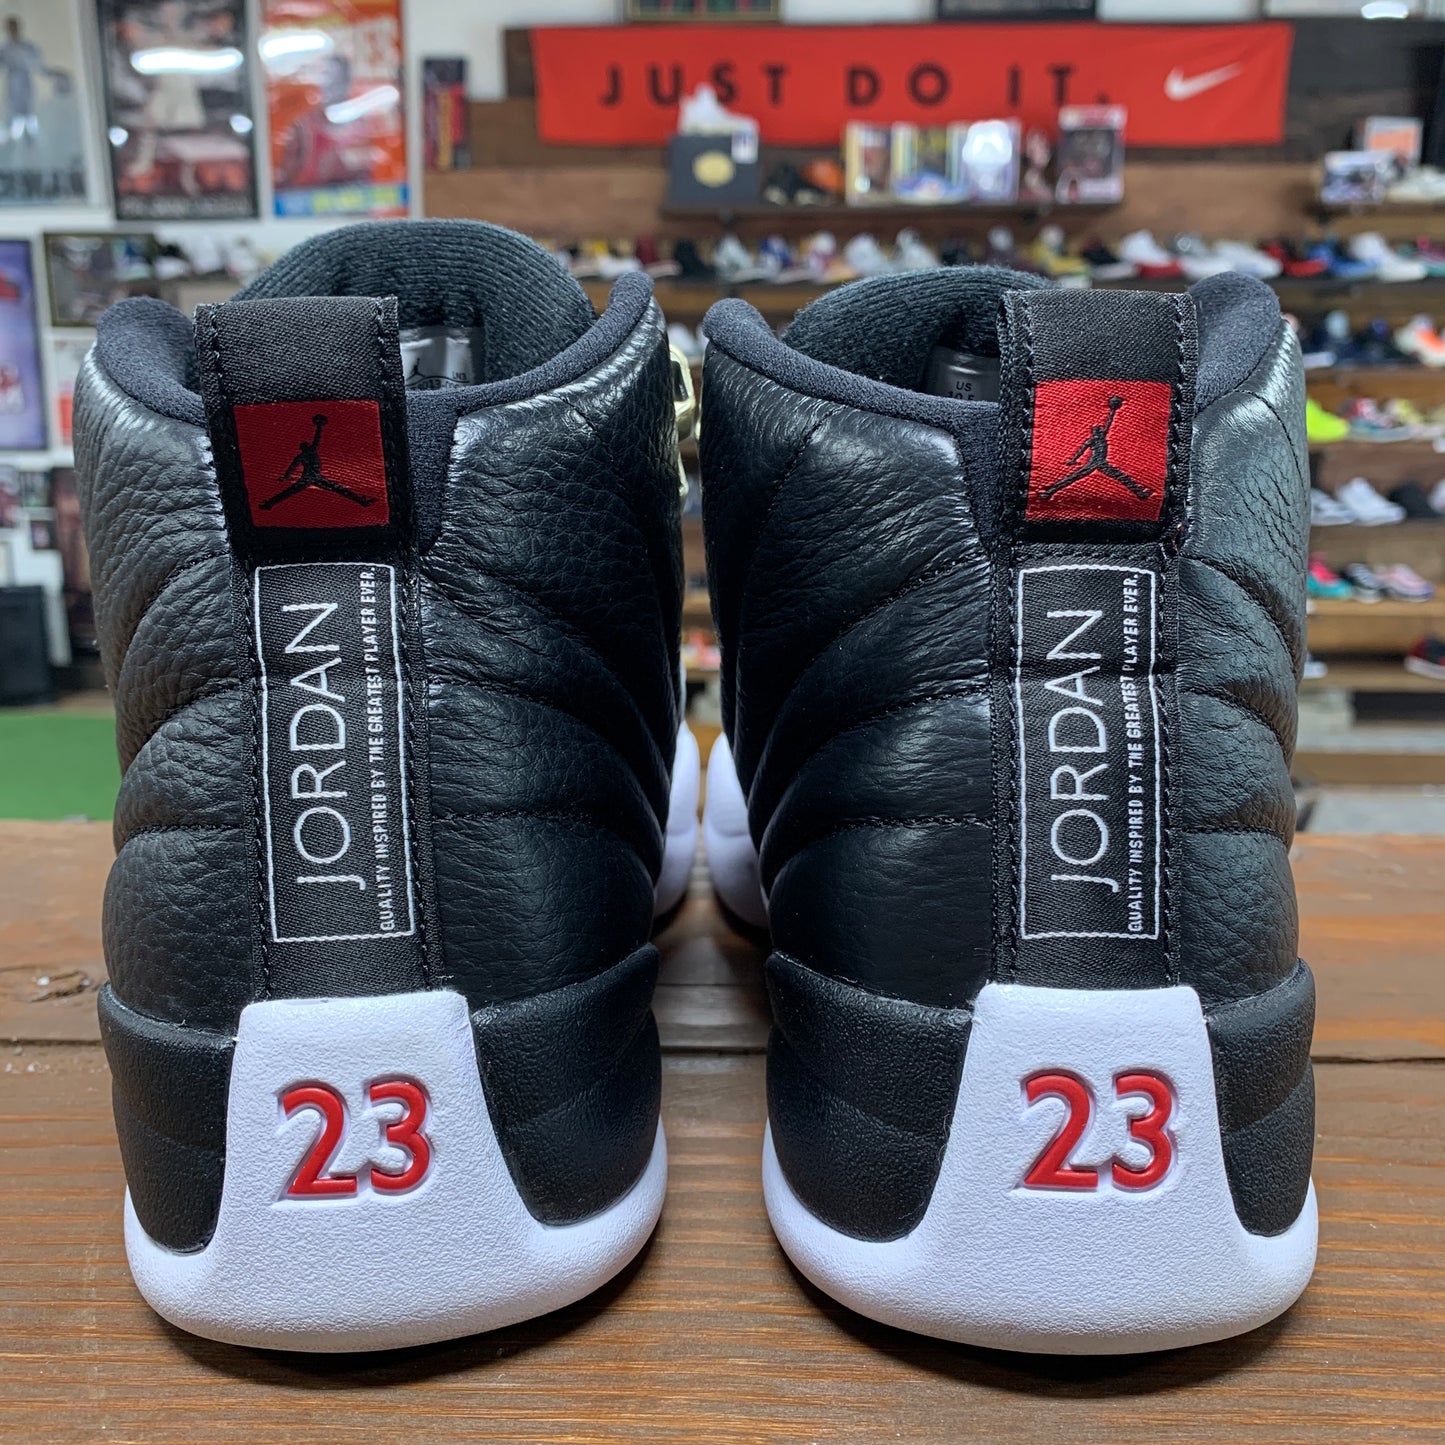 Jordan 12 'Playoffs' Size 10.5